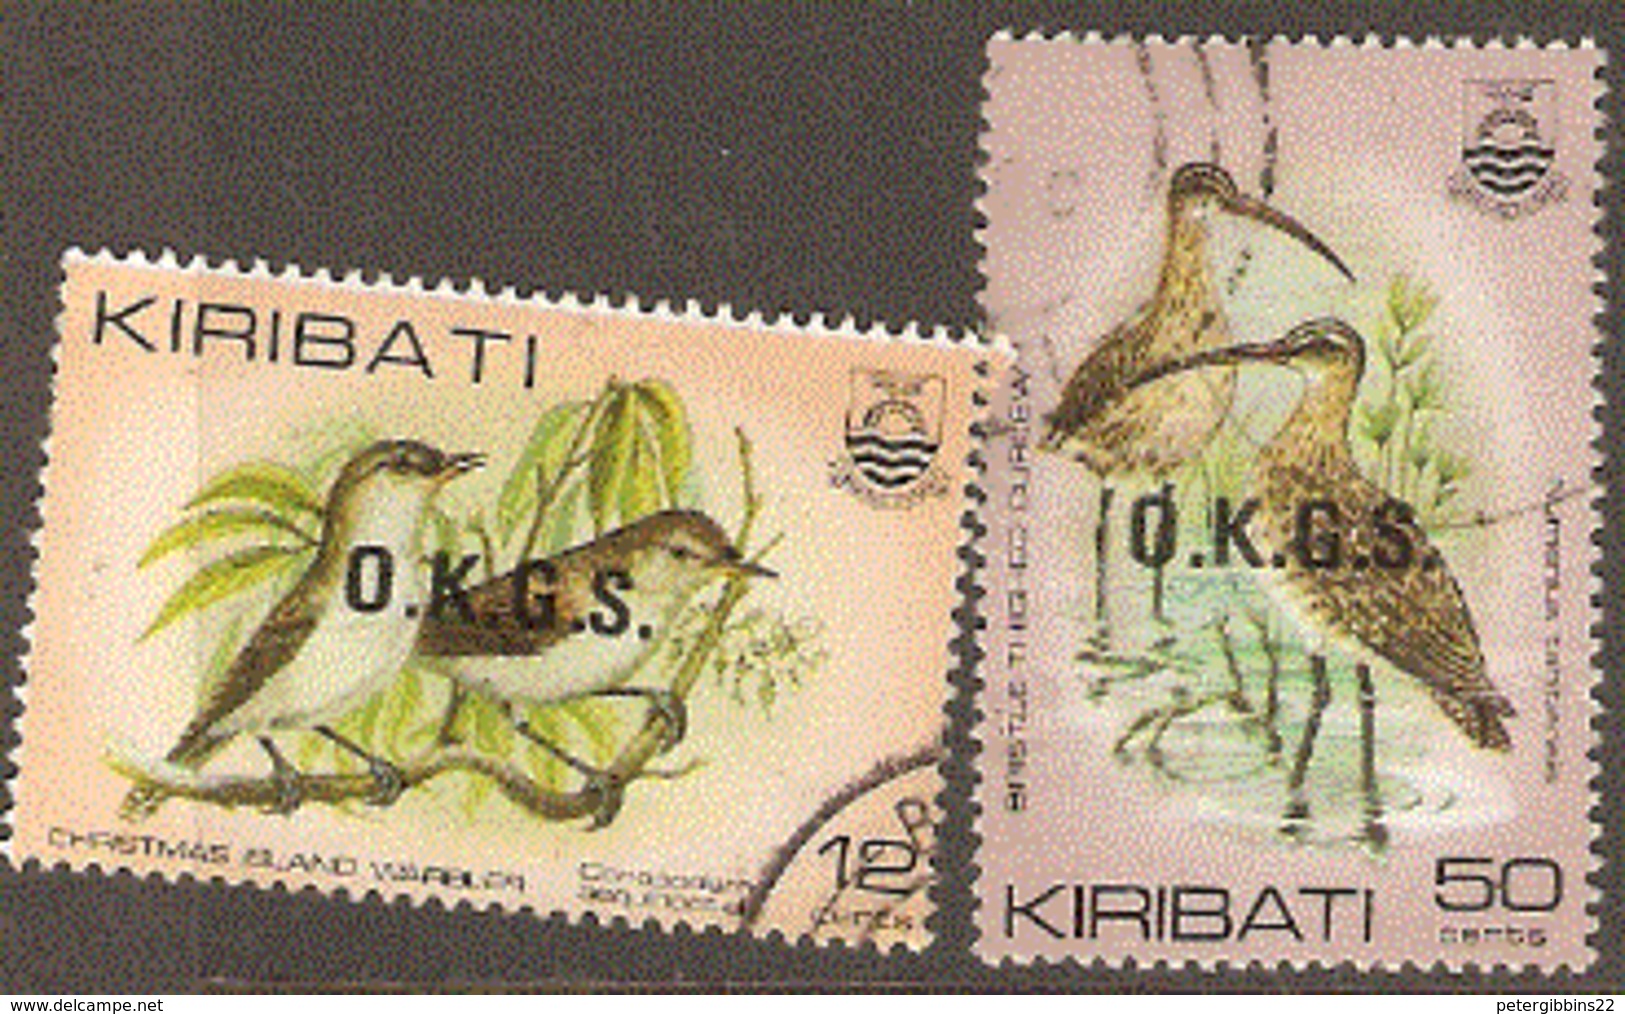 Kiribati 1983  SG 036,9  Birds  Overprted OKGS  Fine Used - Kiribati (1979-...)